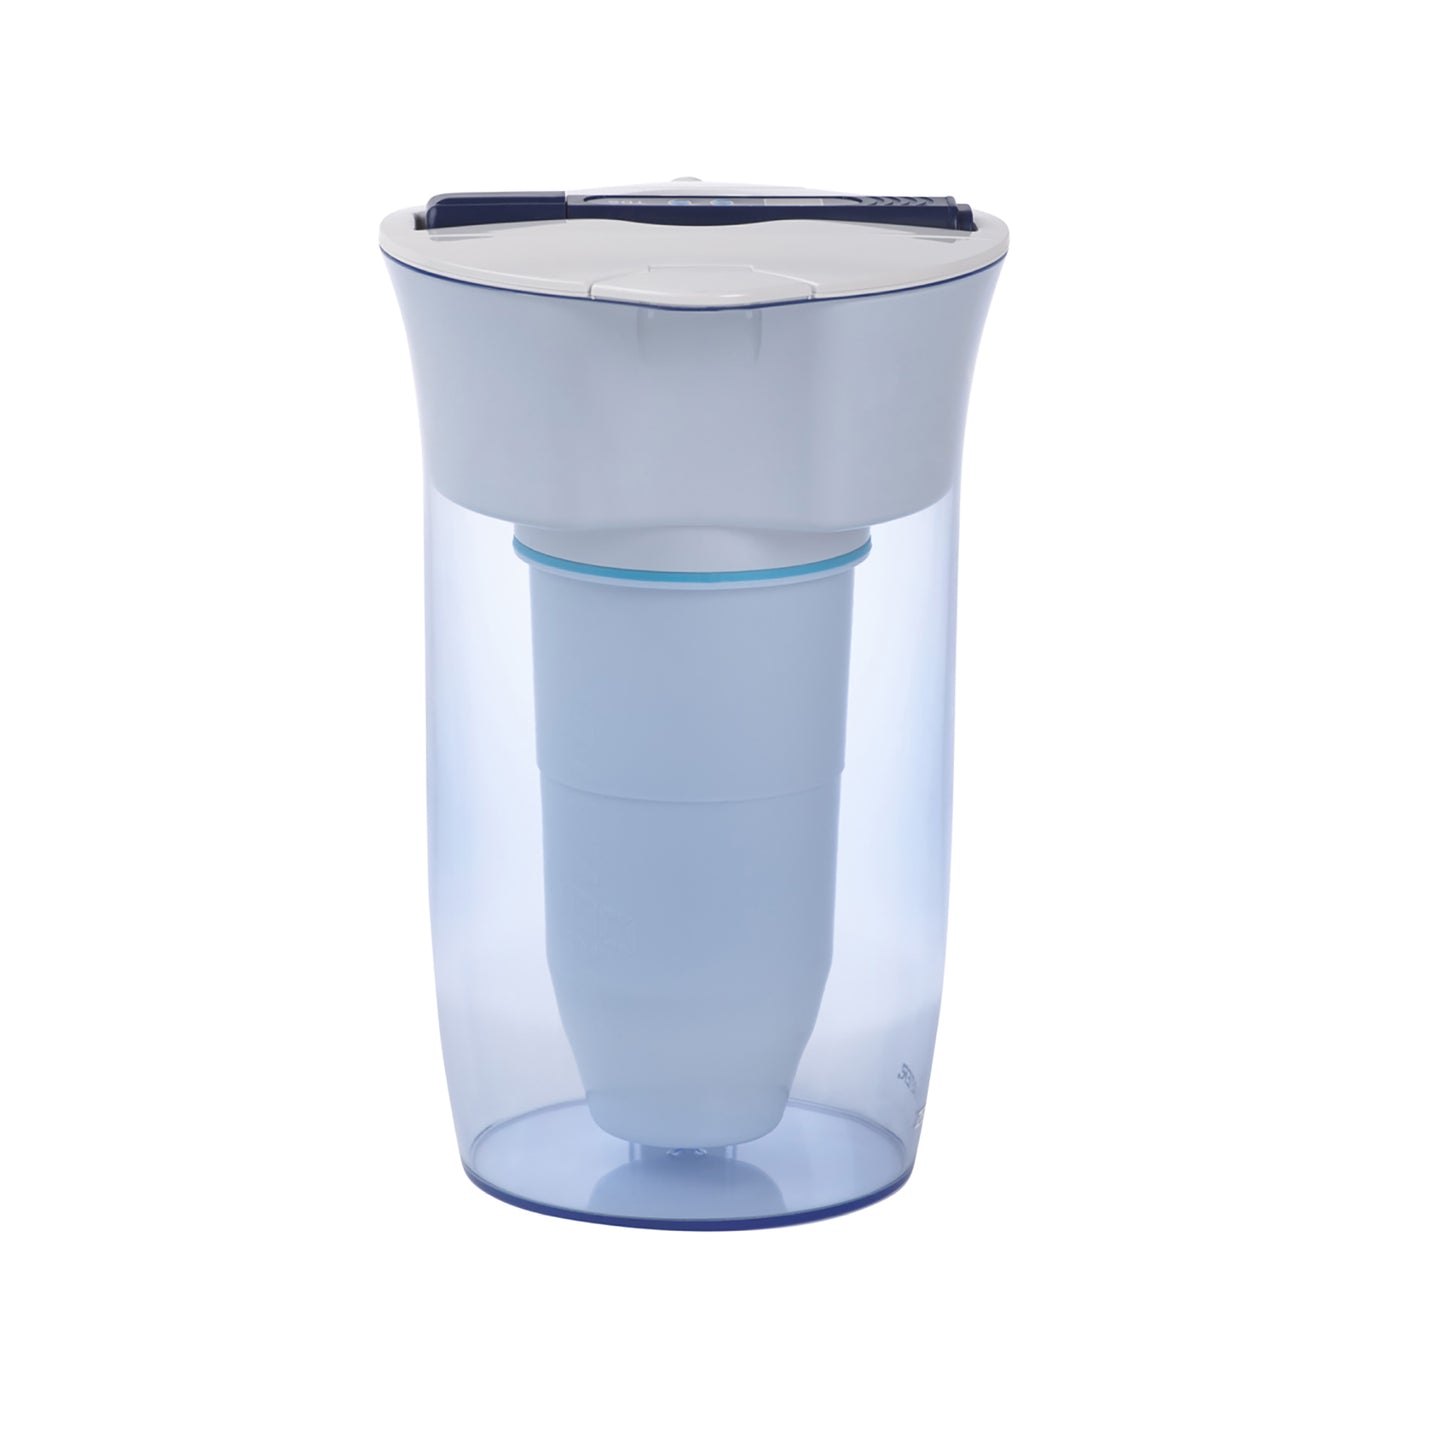 Combi-box: 2.4 liter round jug incl. 3 filters | Combibox 10 cup pitcher round (2,4 liter) + 2 filters